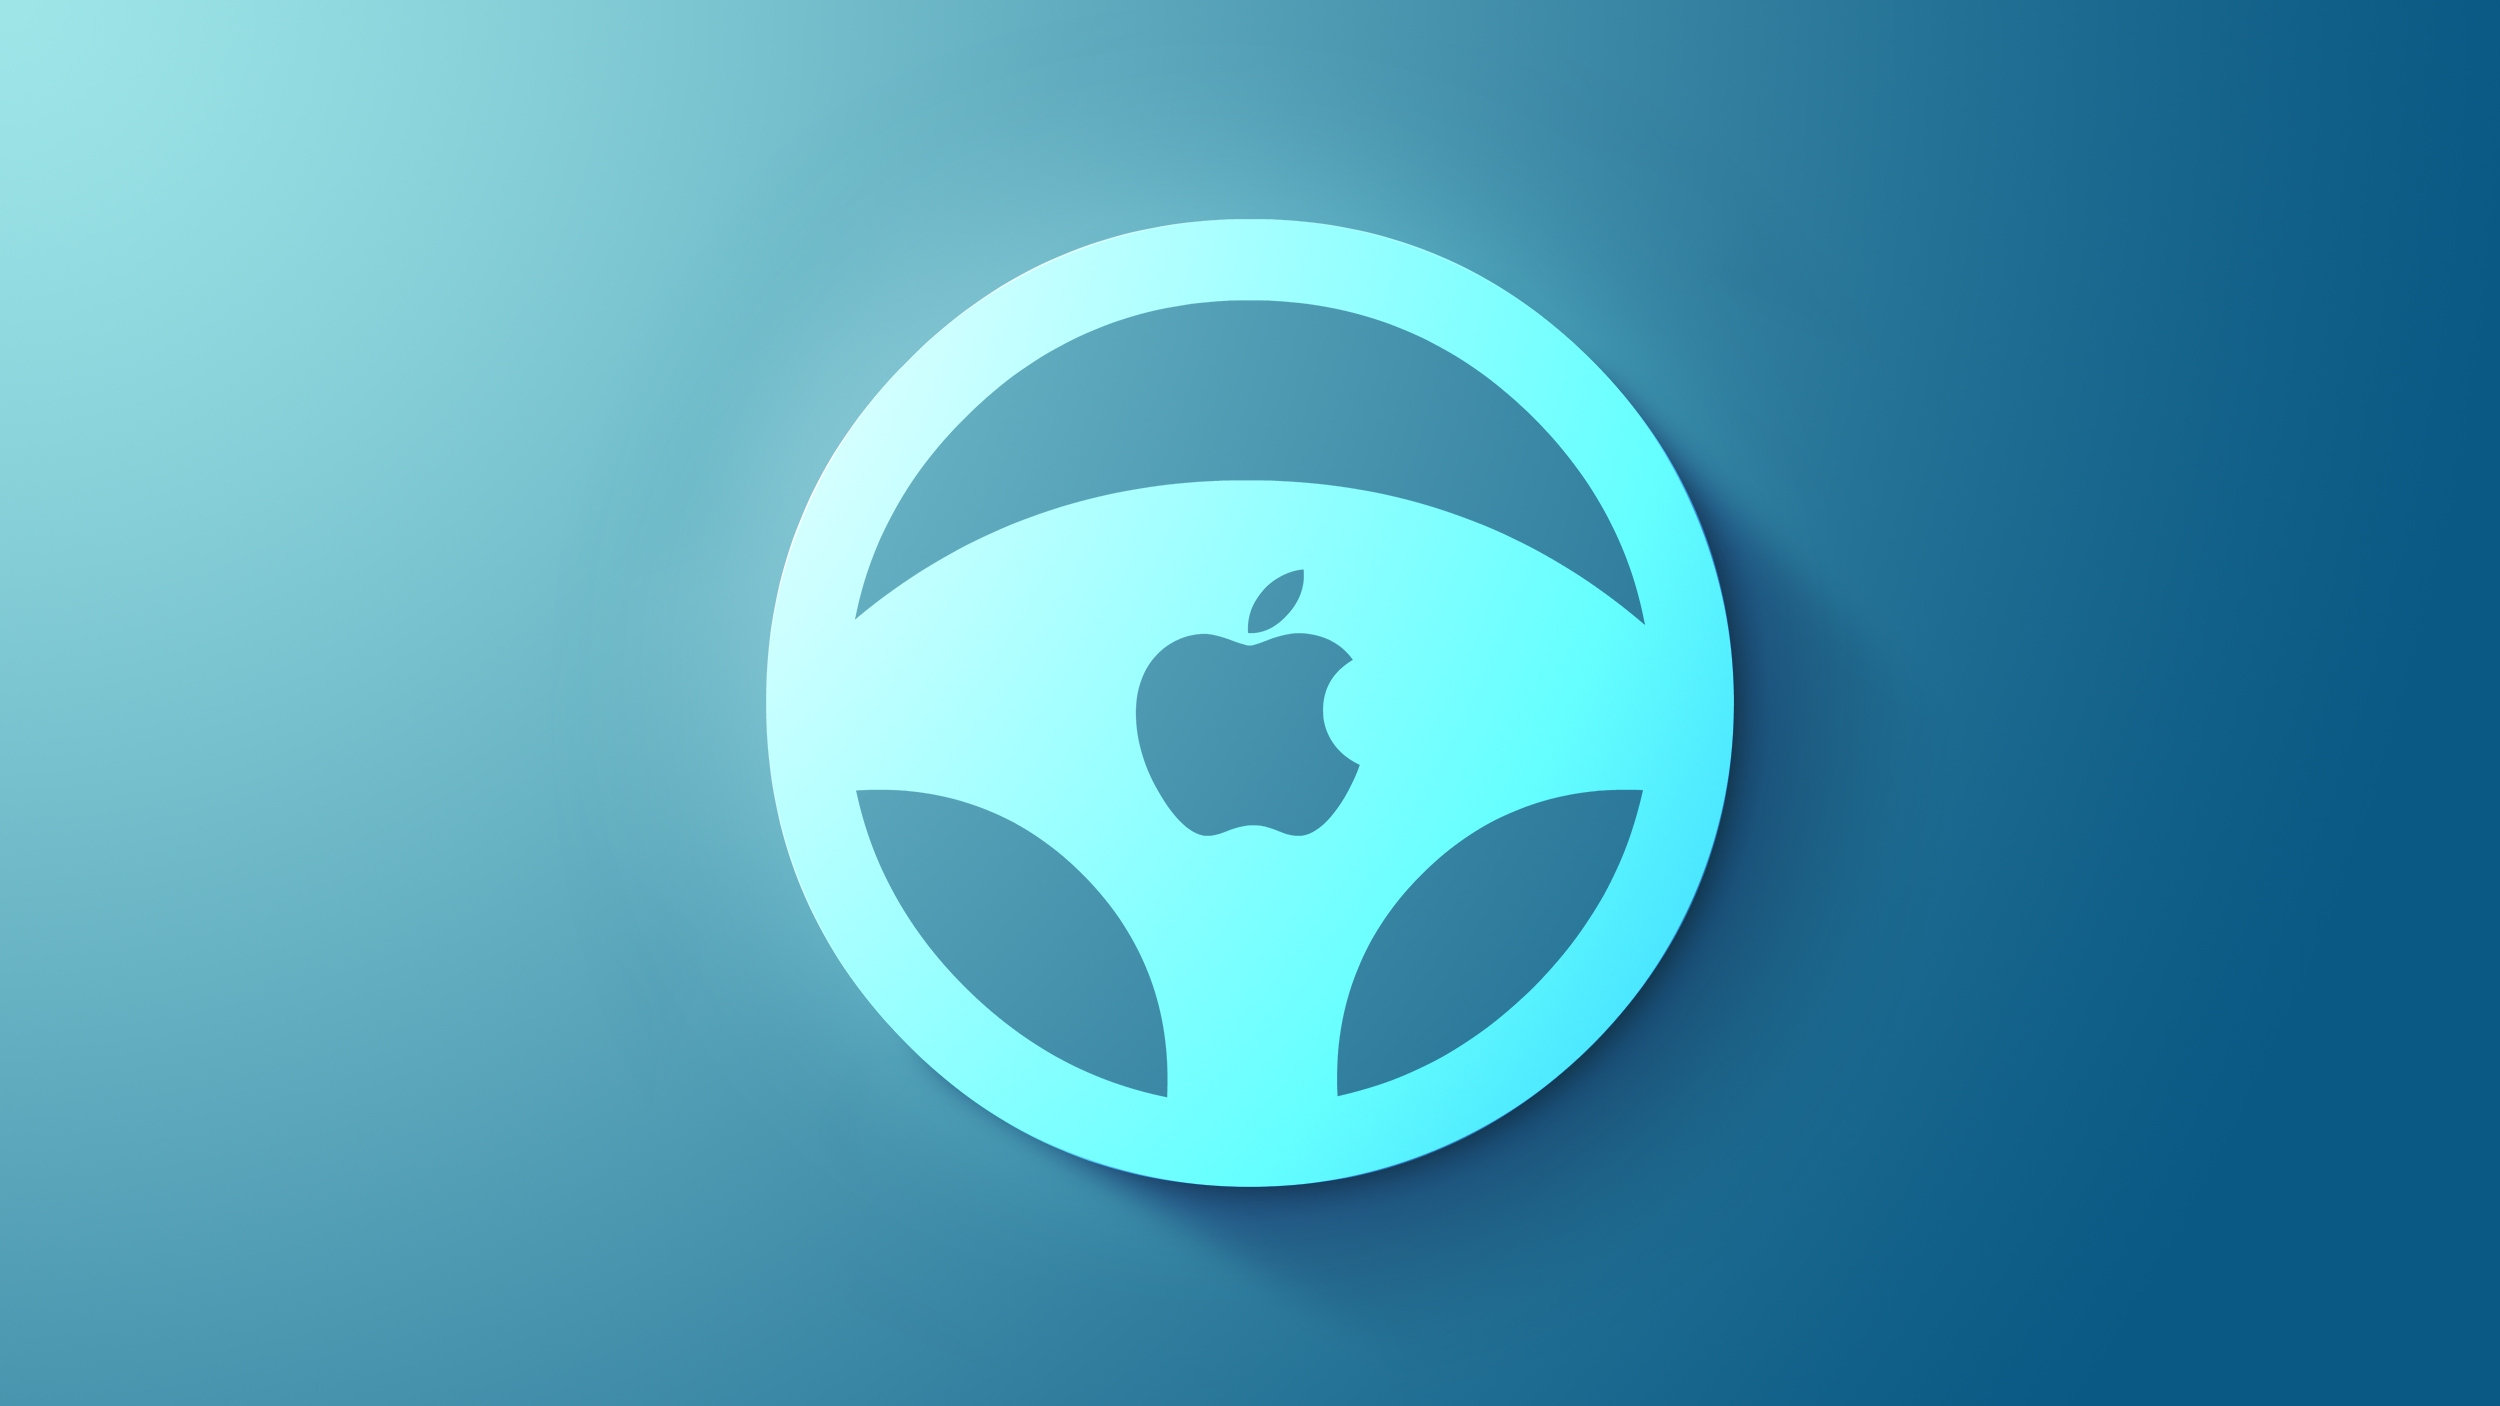 Apple car wheel icon feature blue